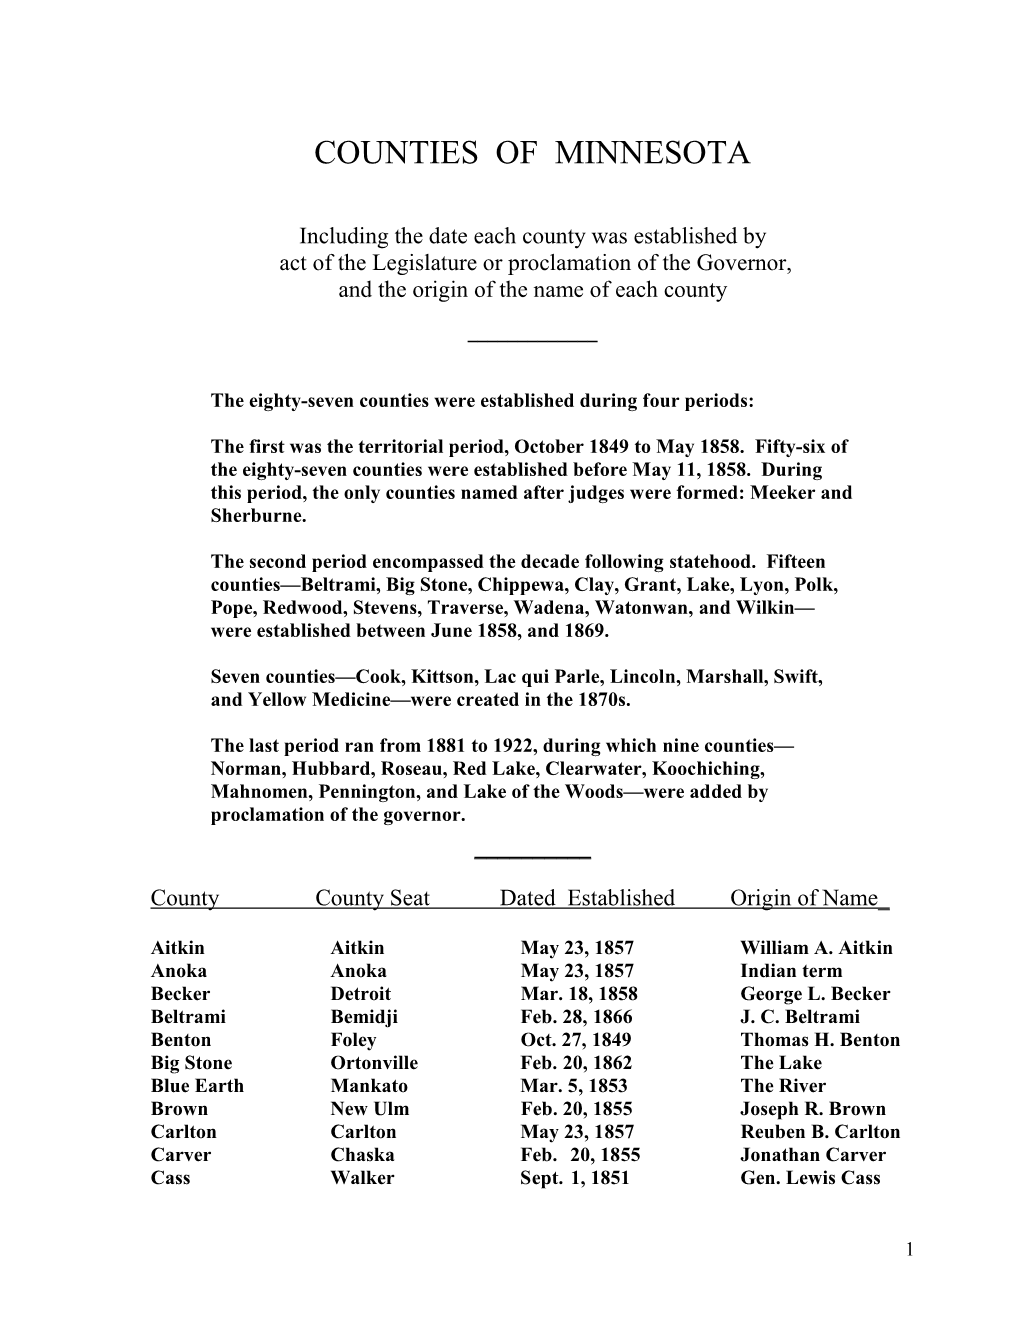 Counties of Minnesota